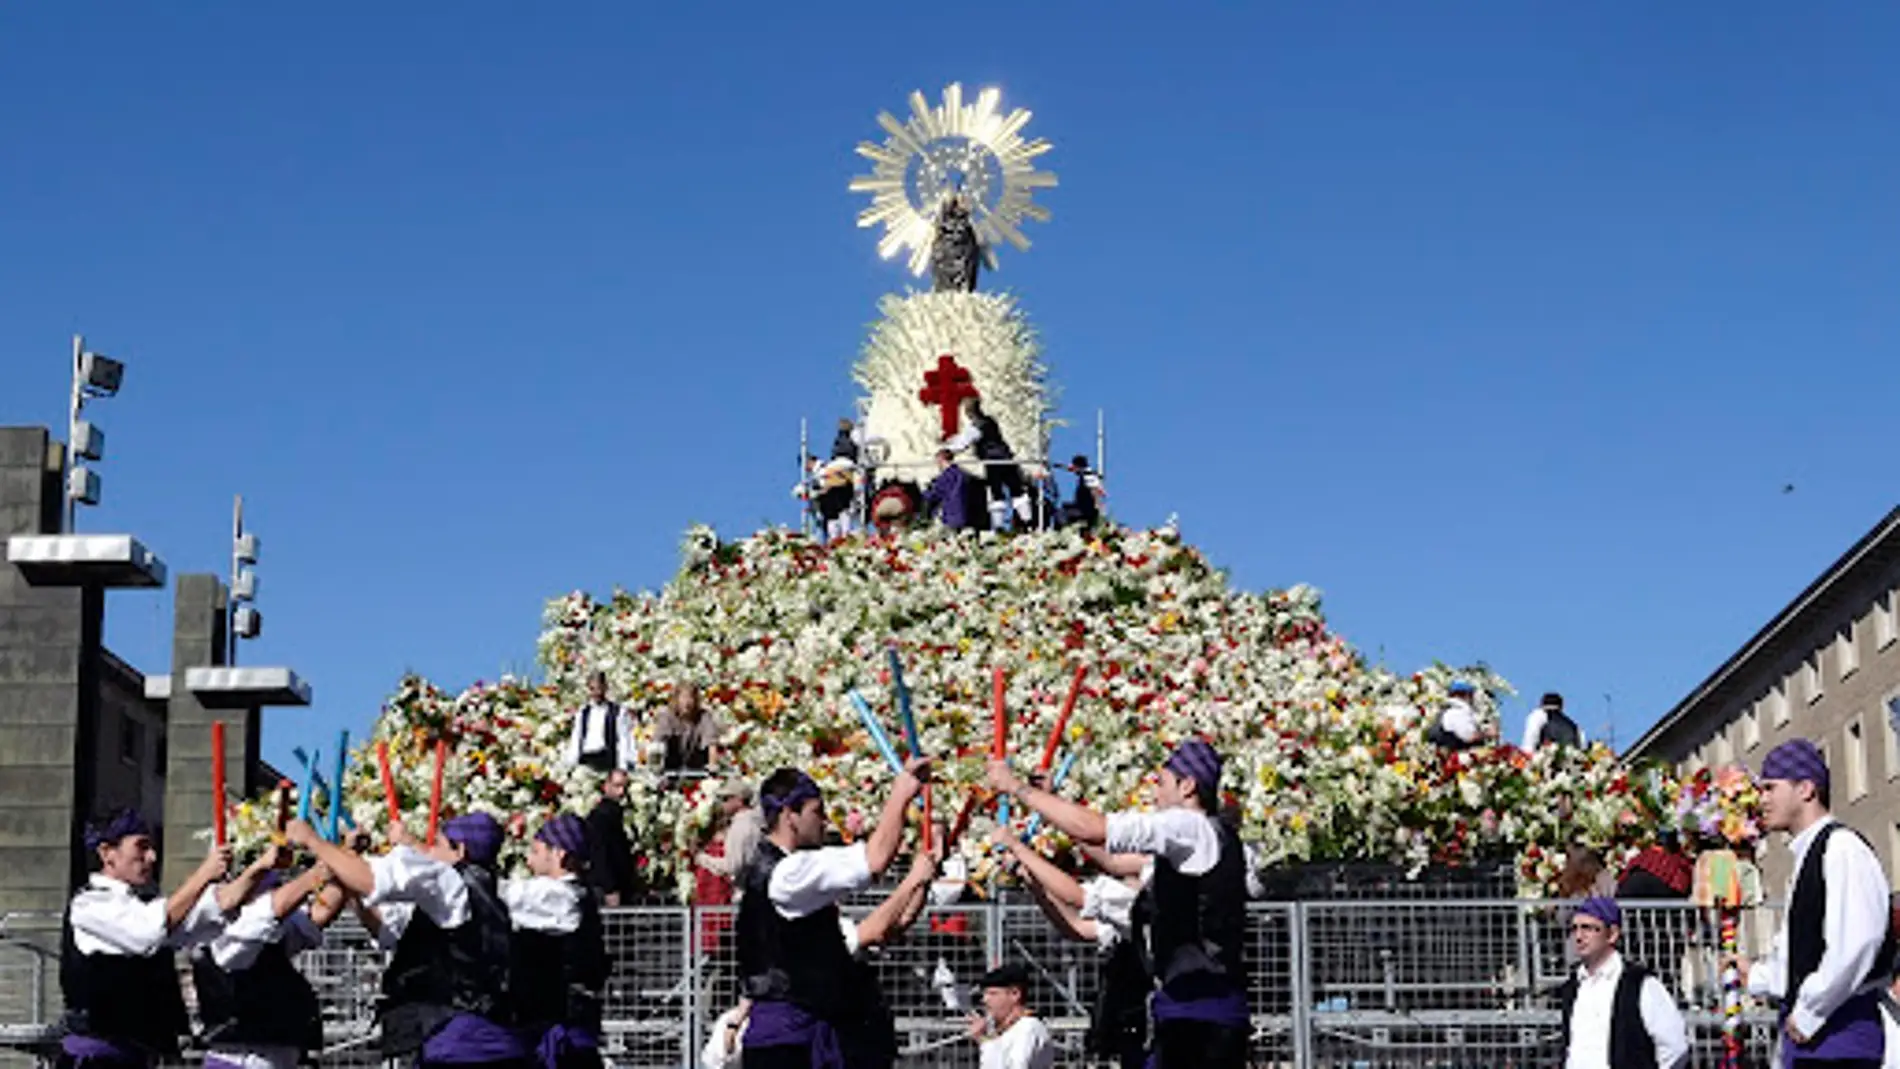 Ofrenda de Flores a la Virgen del Pilar